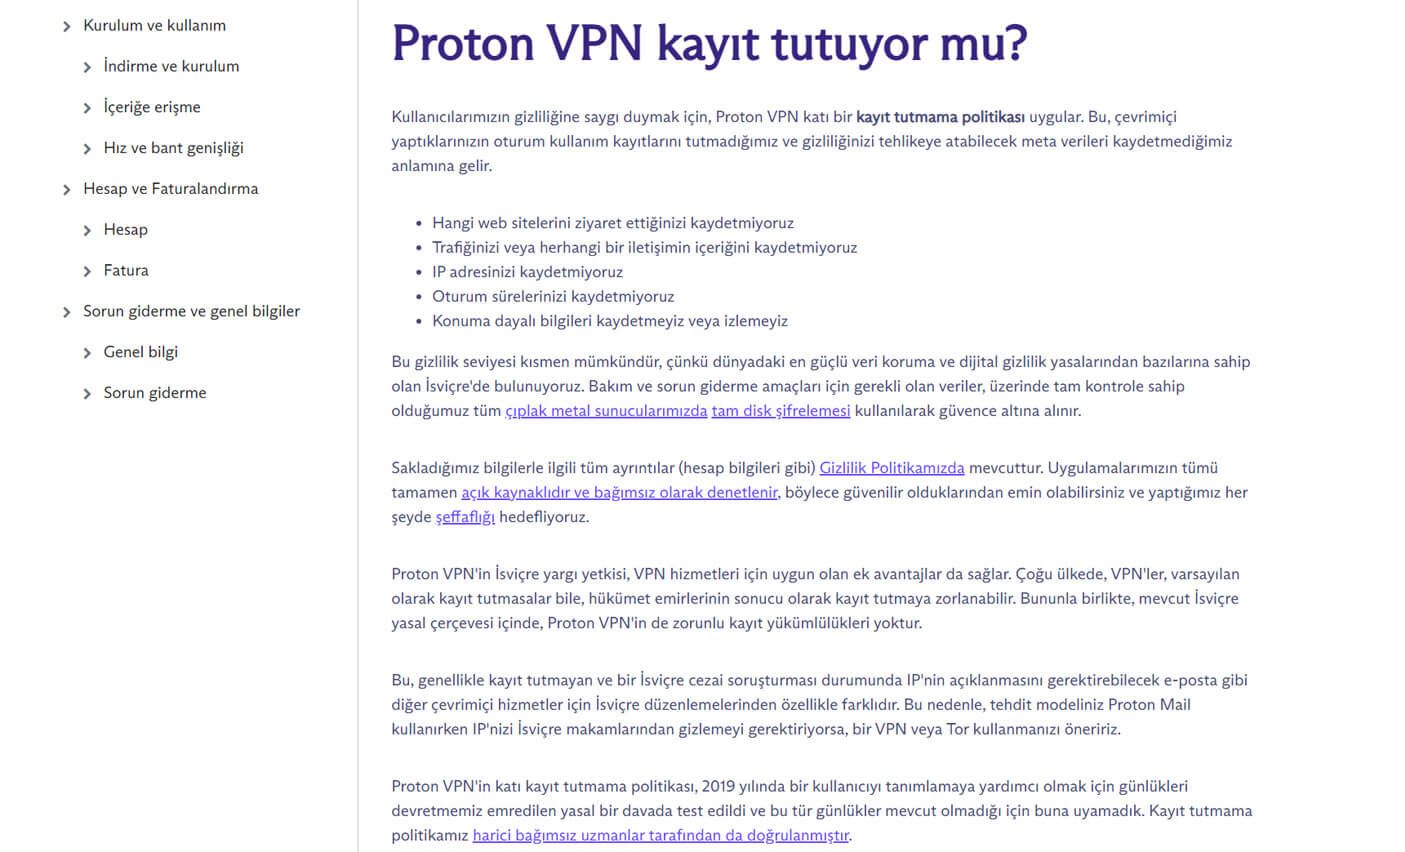 ProtonVPN Kayıt Tutmama Politikası